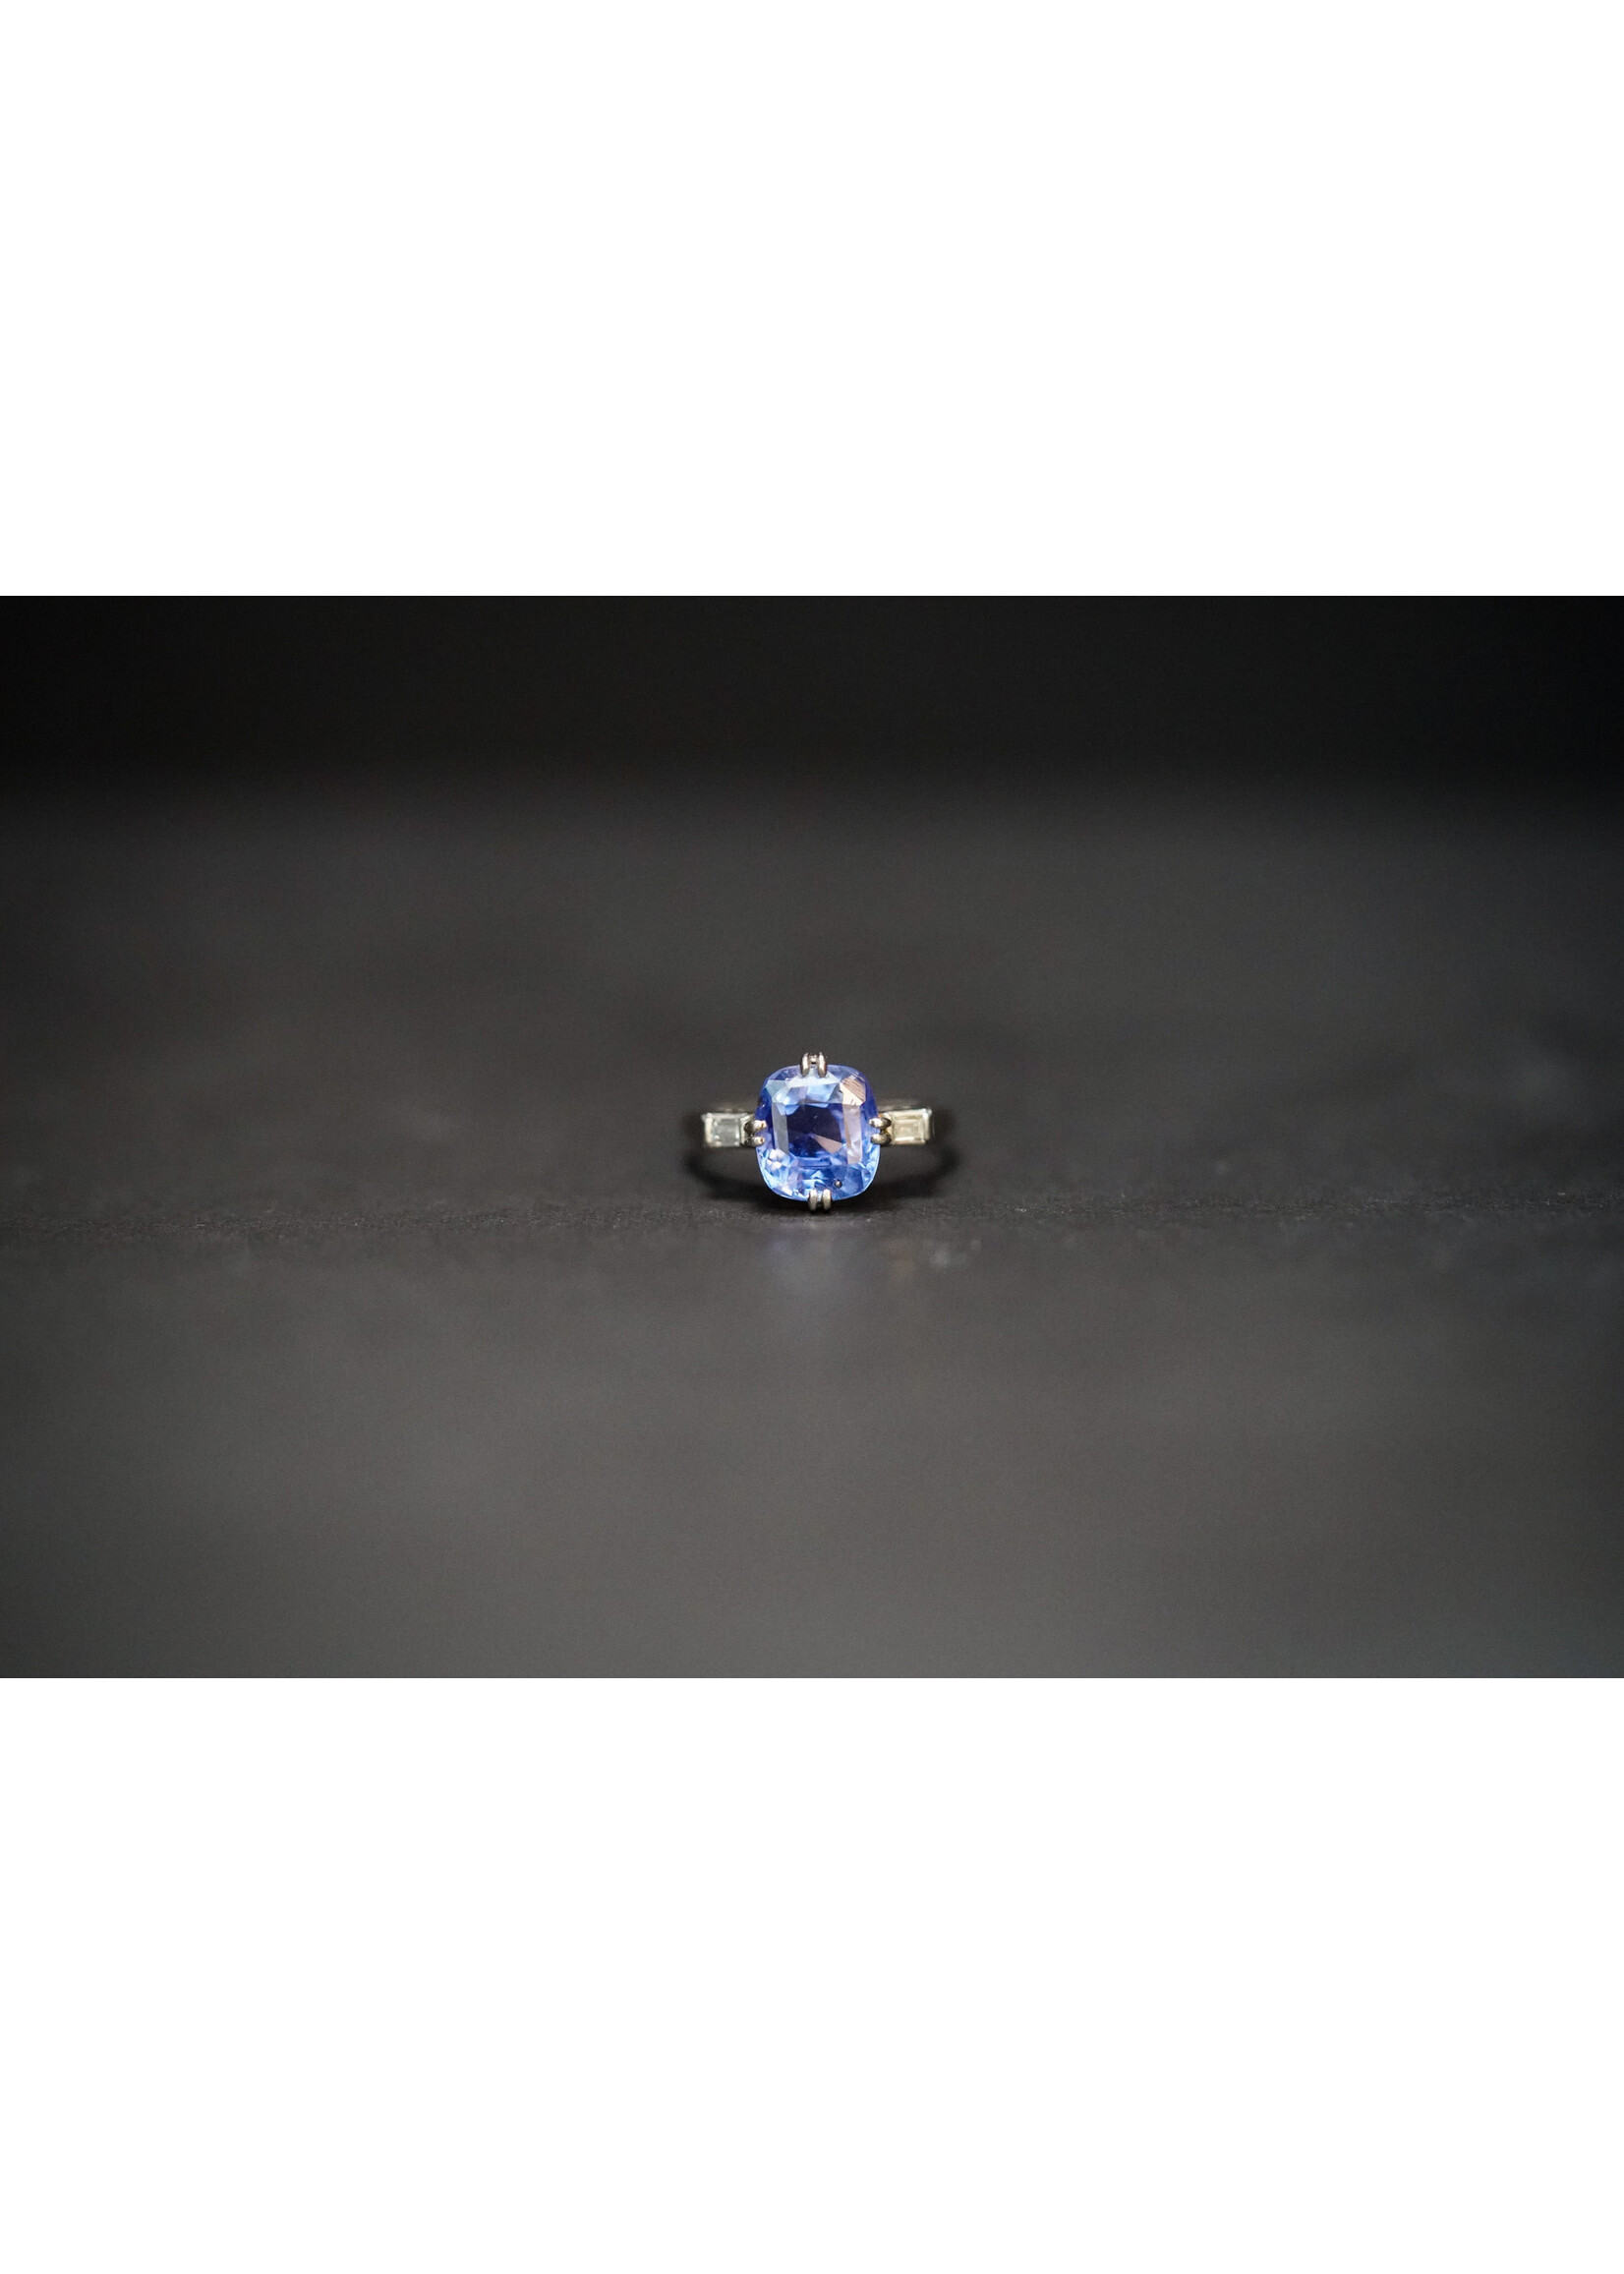 Platinum 4.46g 3.20ctw (3.10ctr) Blue Sapphire & Diamond Vintage Ring (size 5)